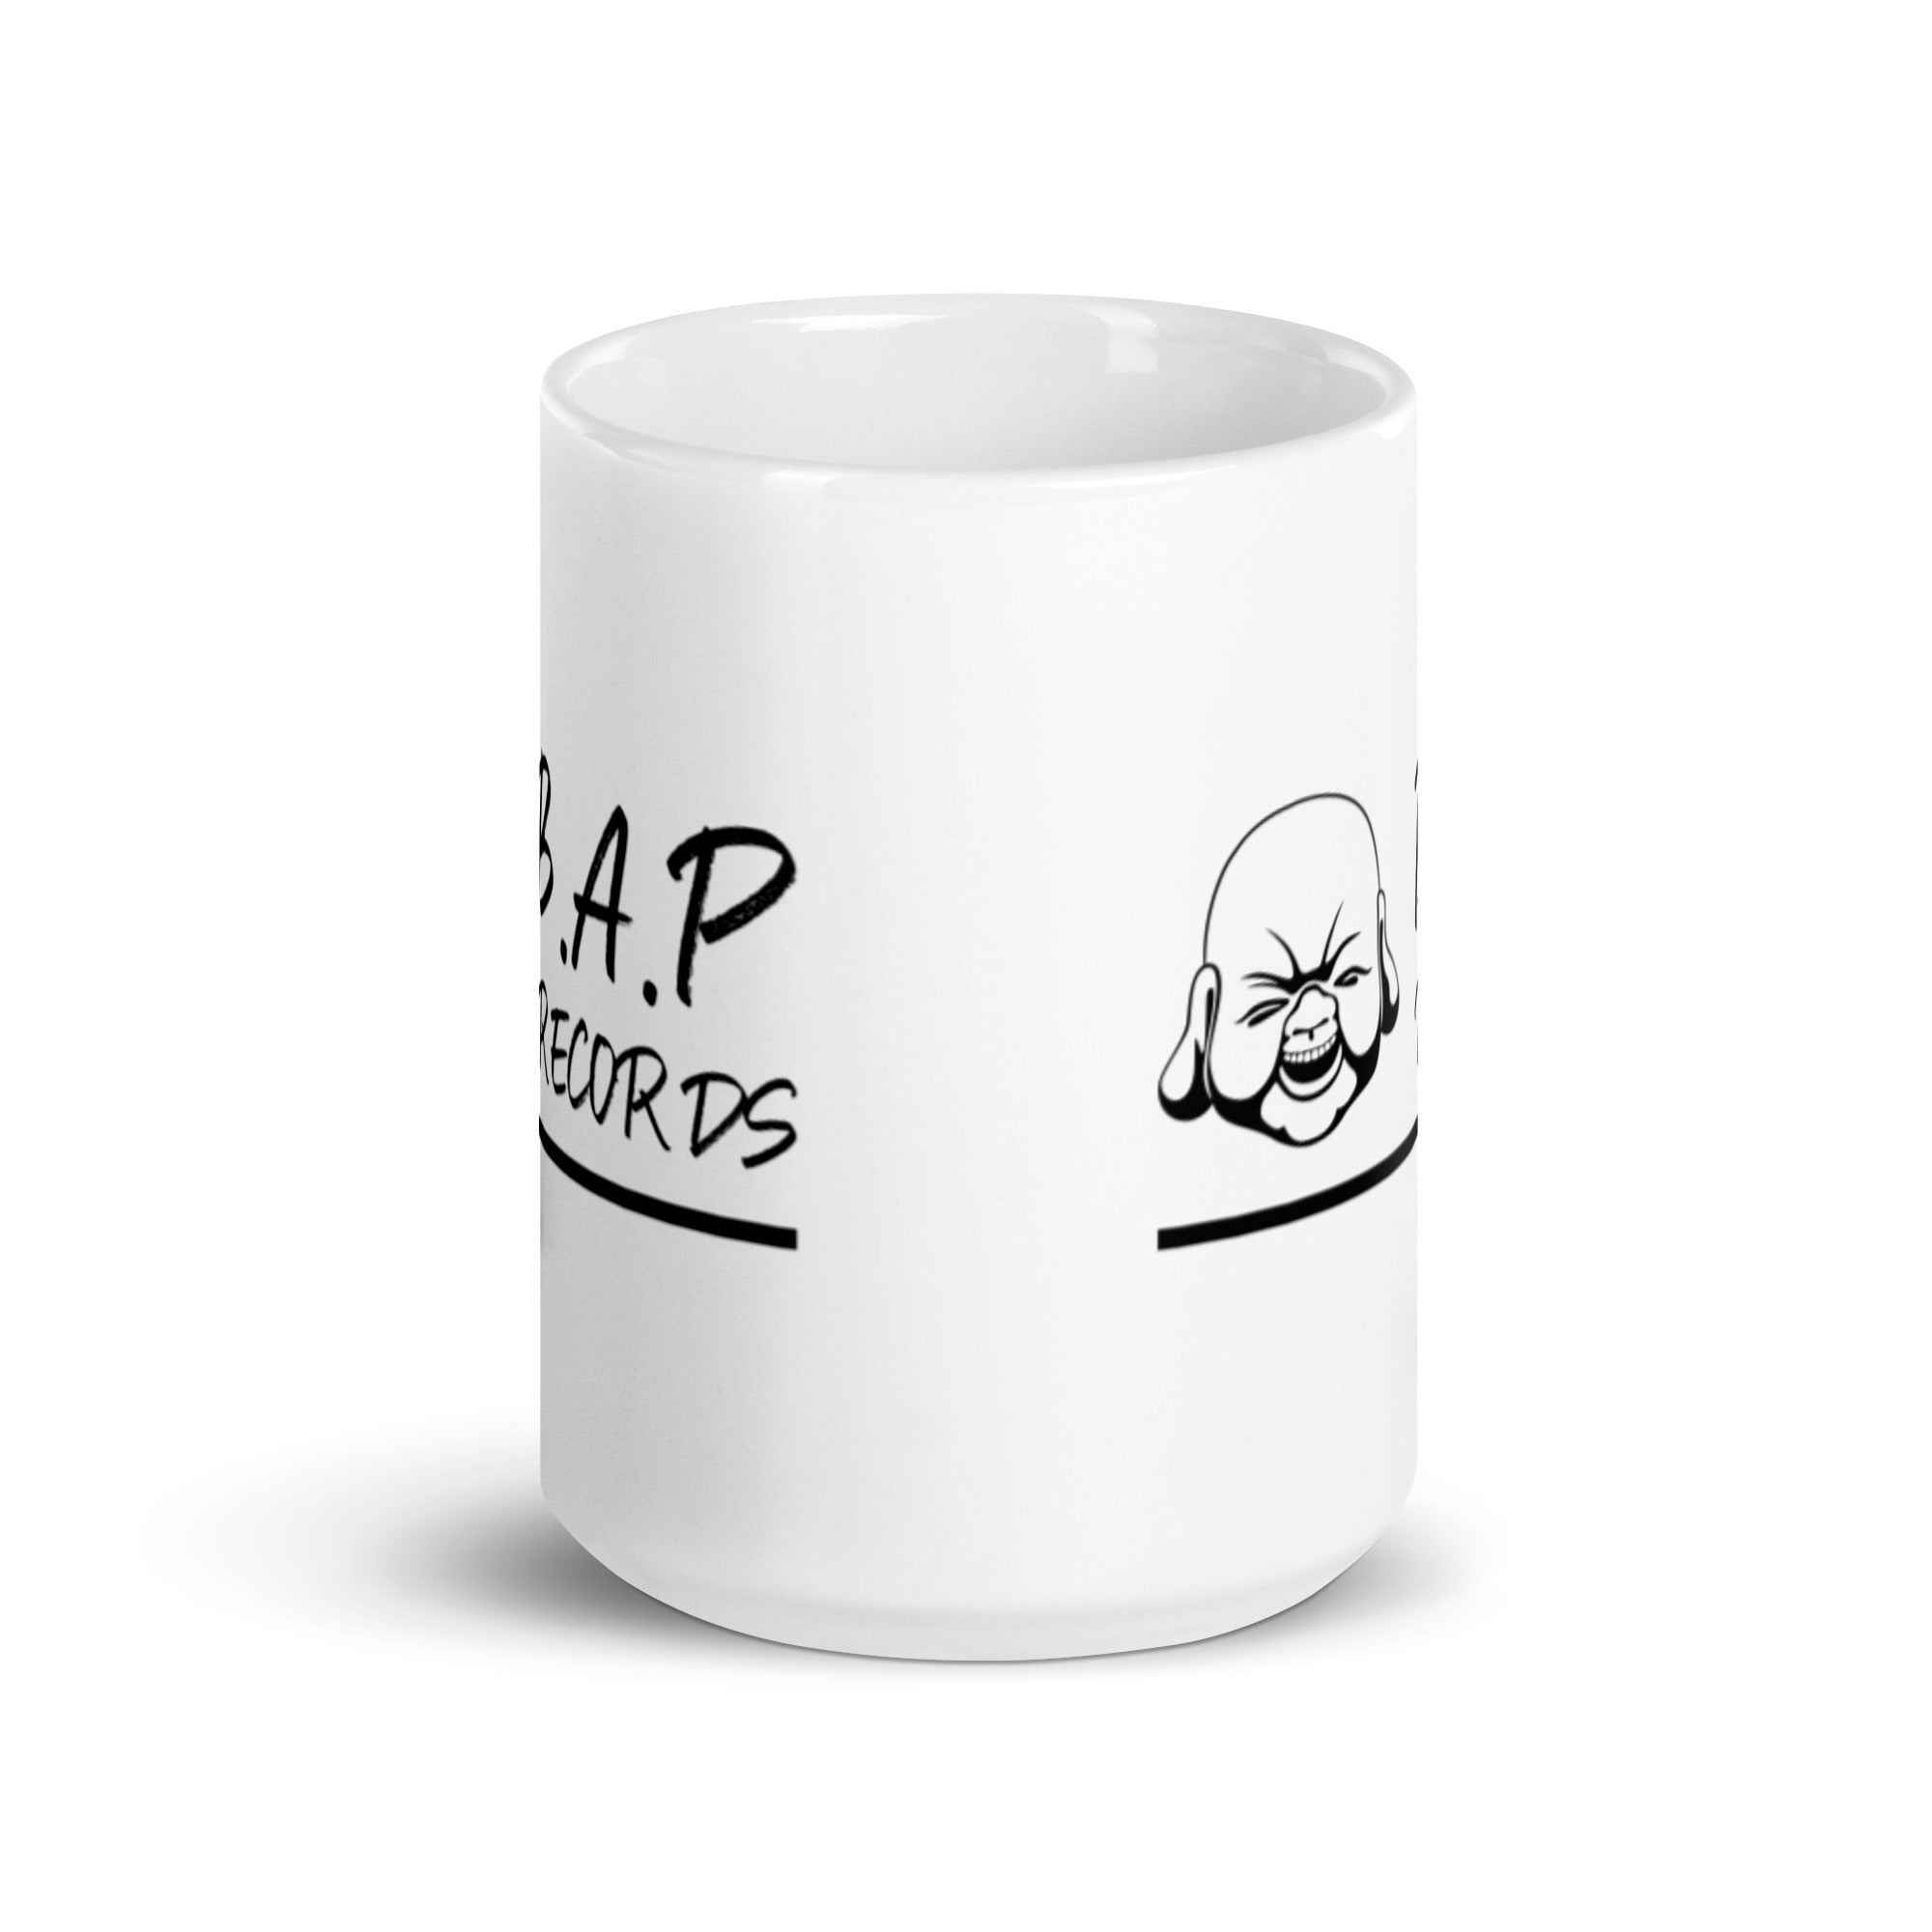 Perception - White glossy mug